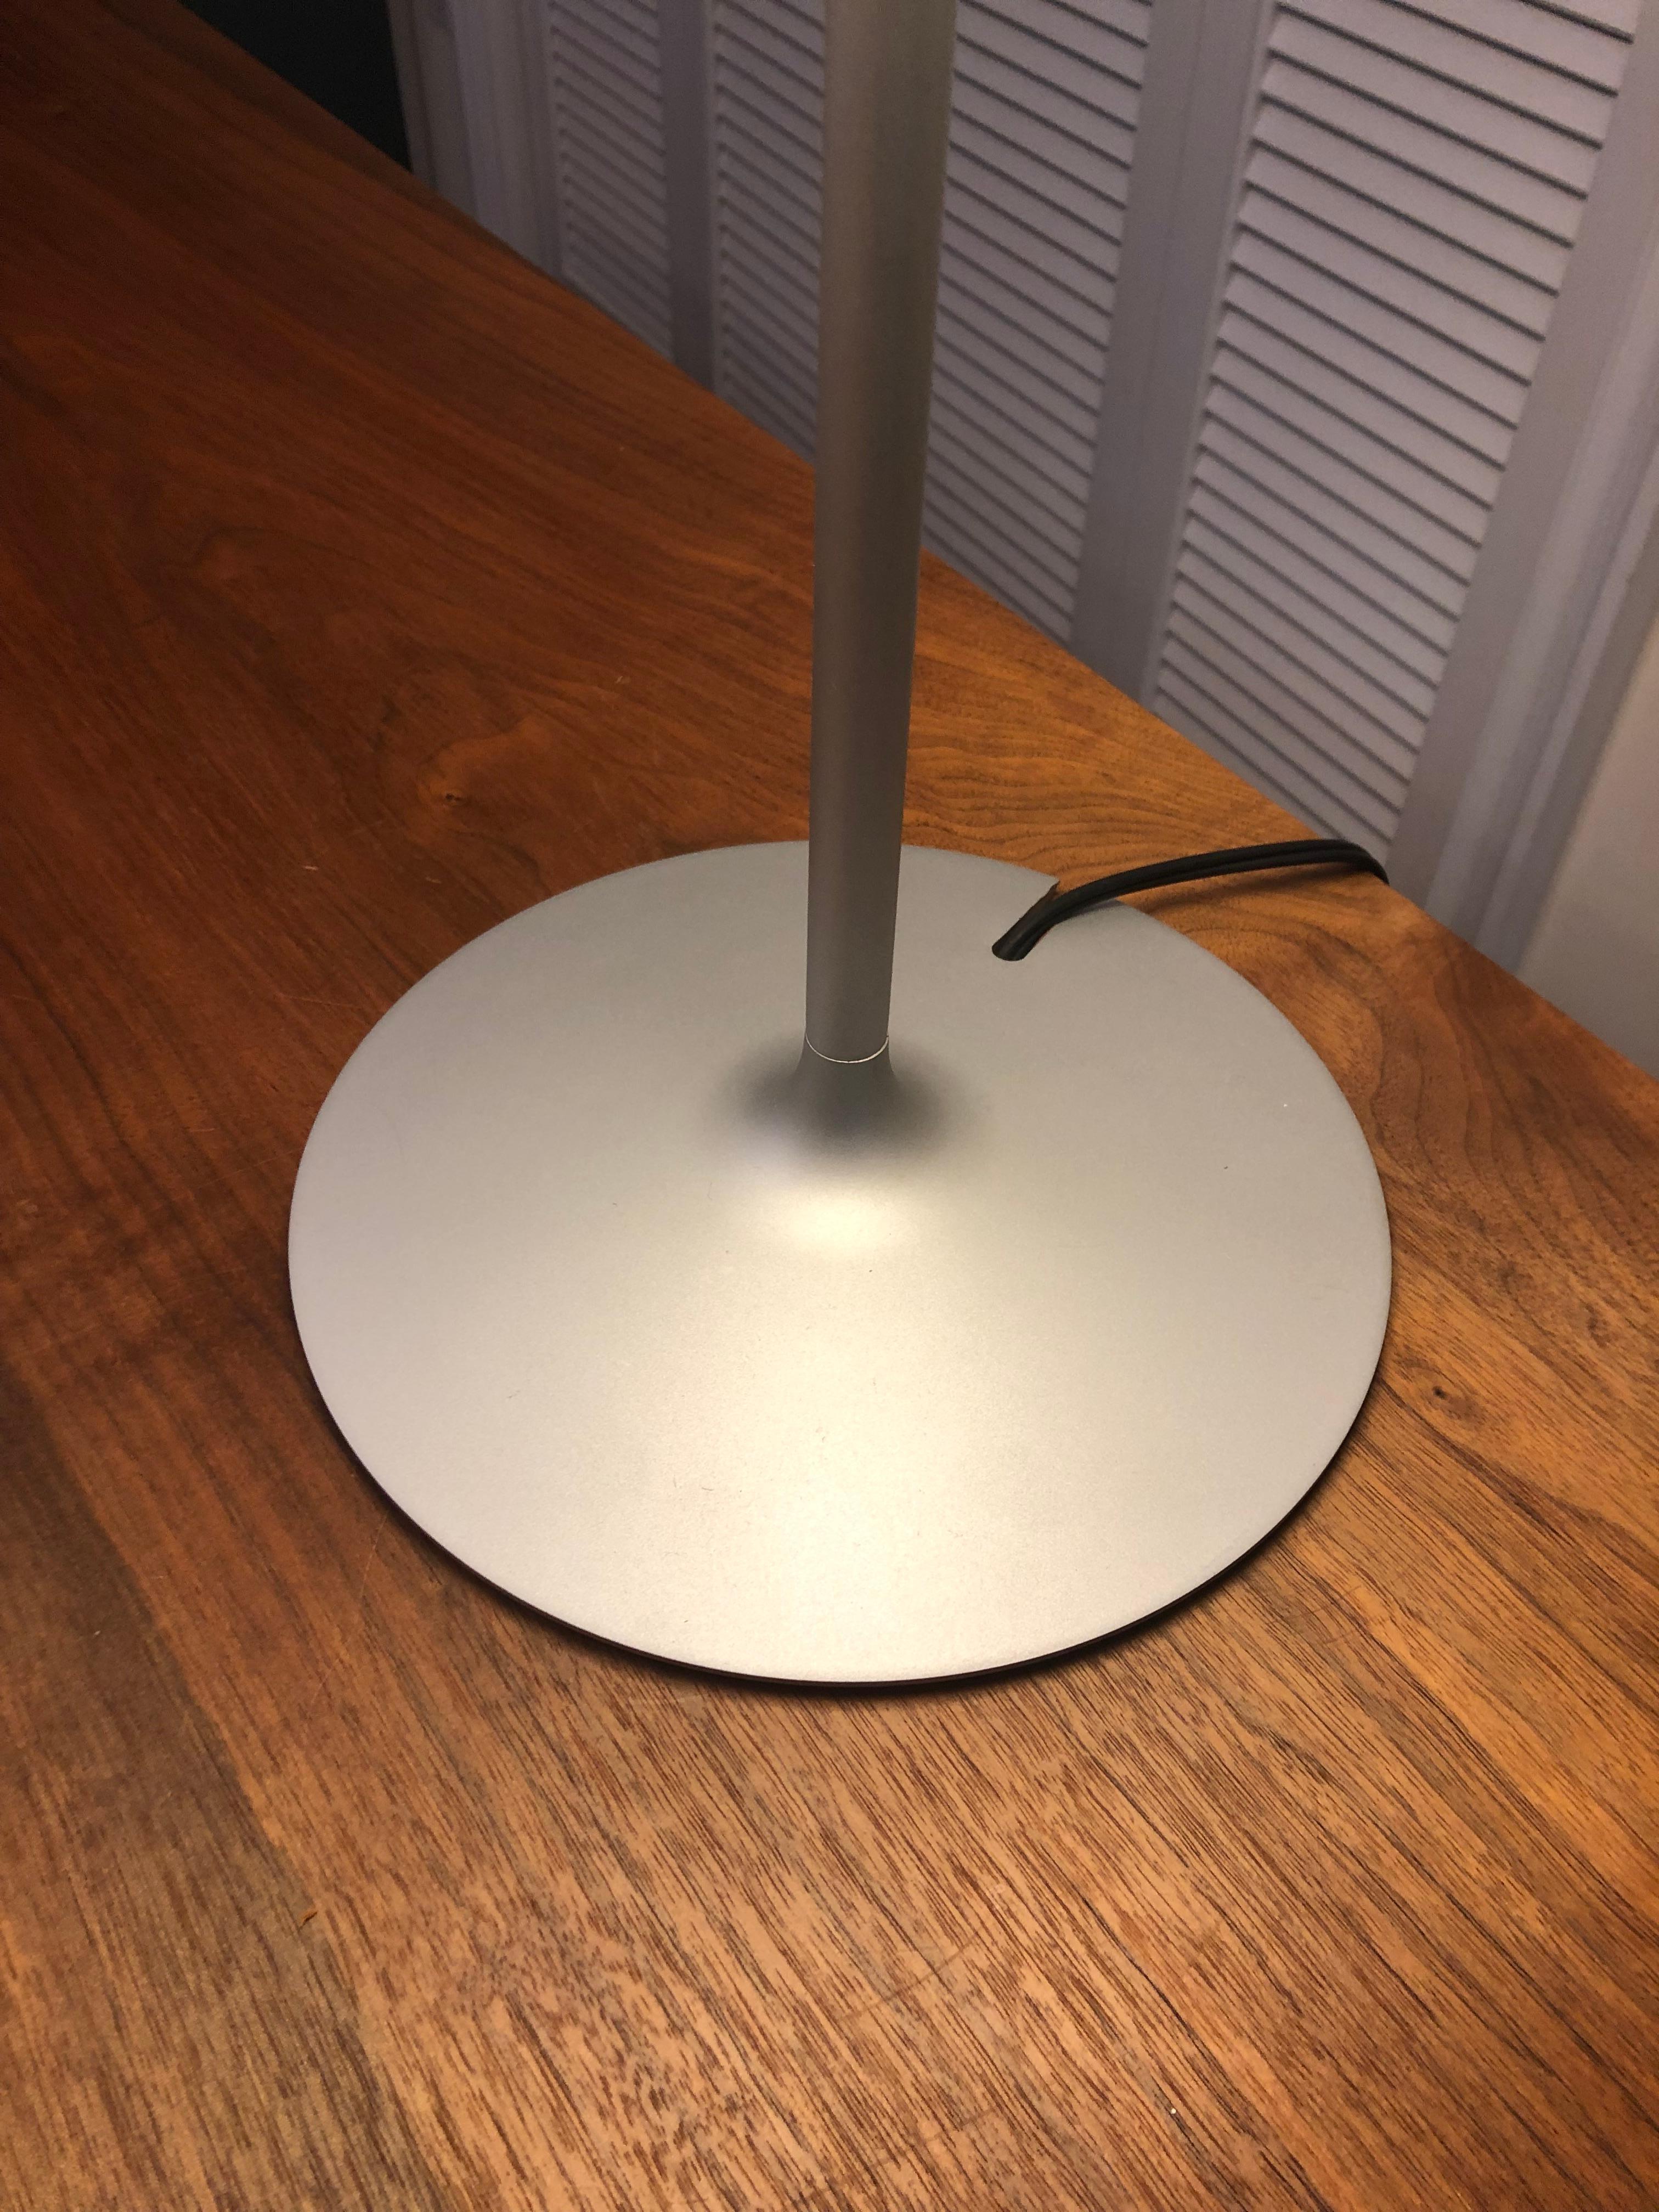 romeo moon table lamp